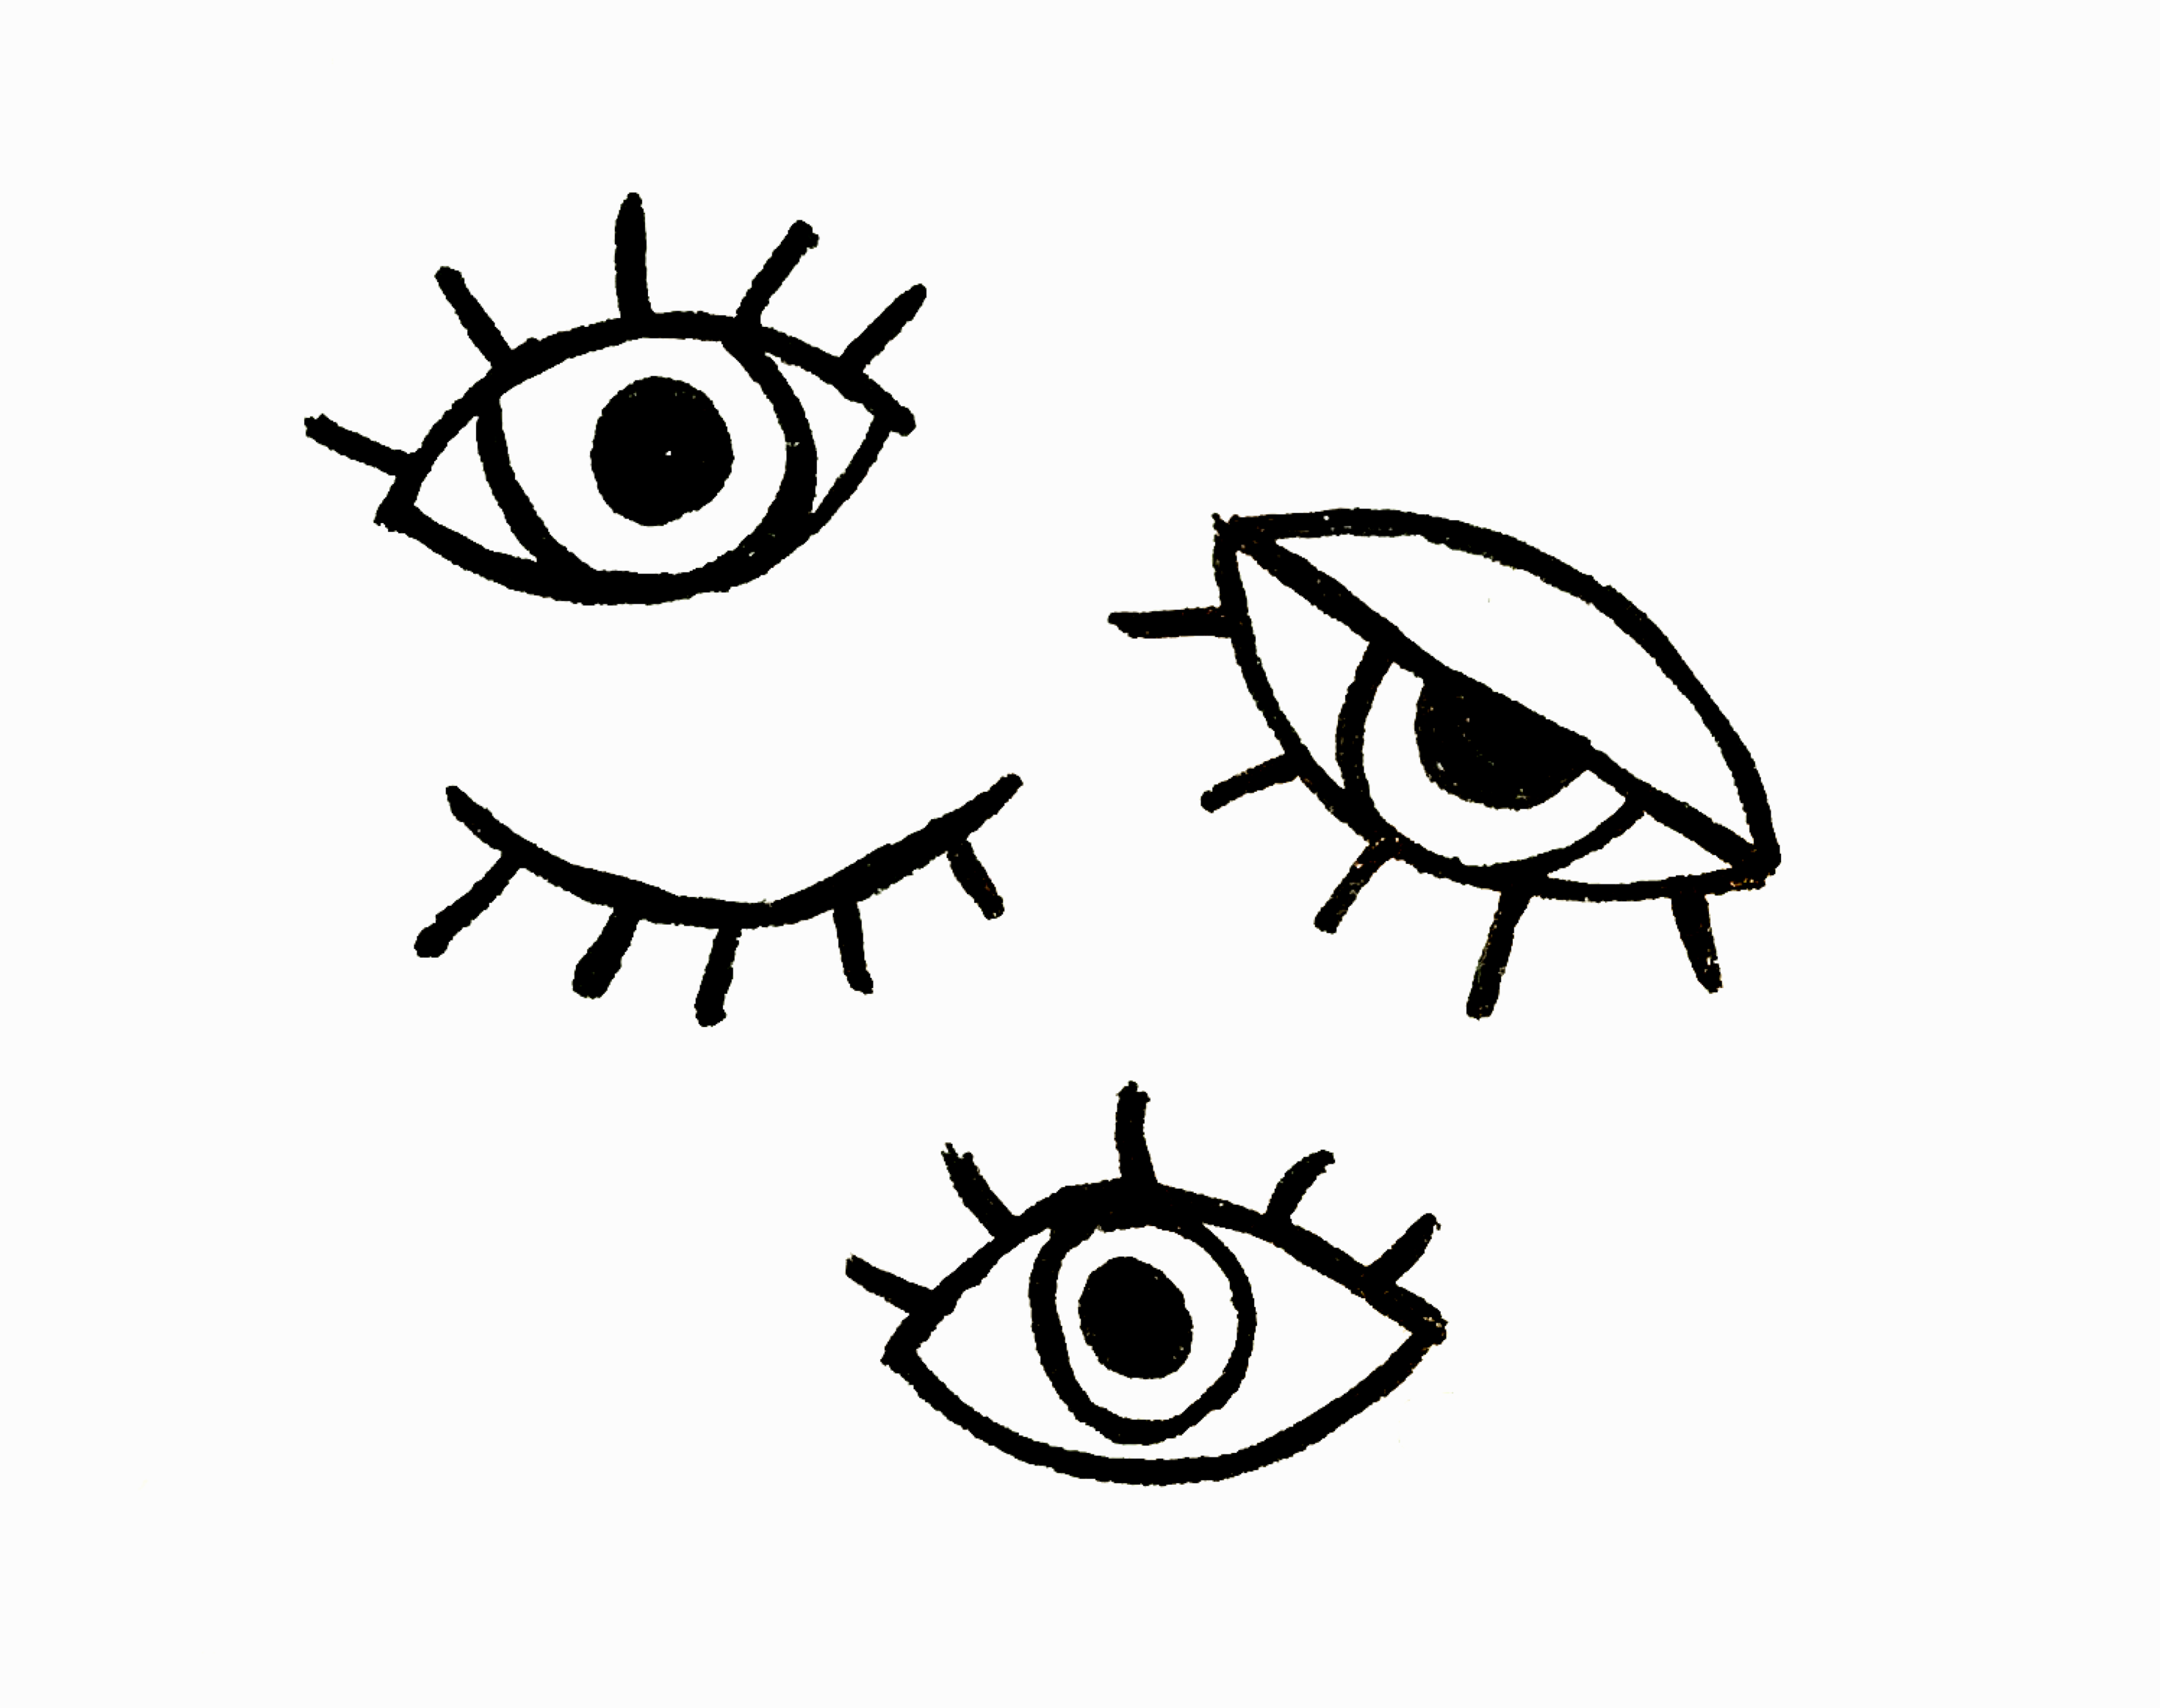 An illustration of several eye balls.